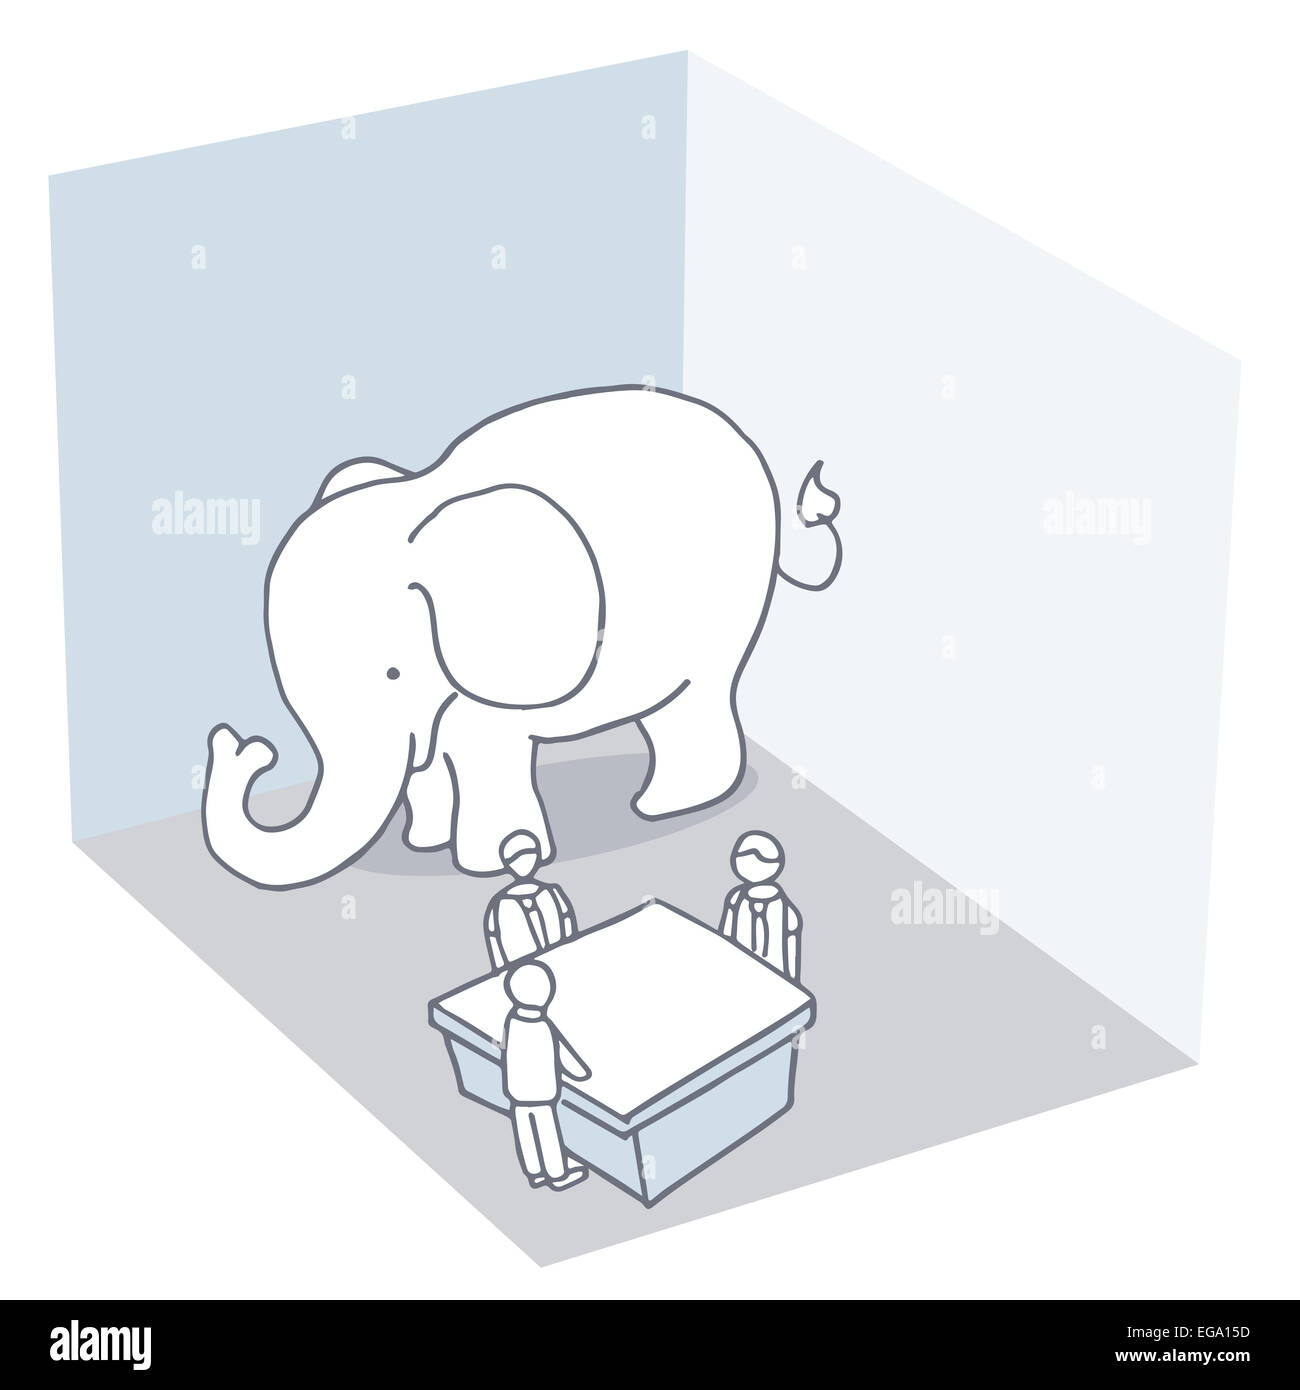 Una immagine di un elefante in camera metafora. Foto Stock